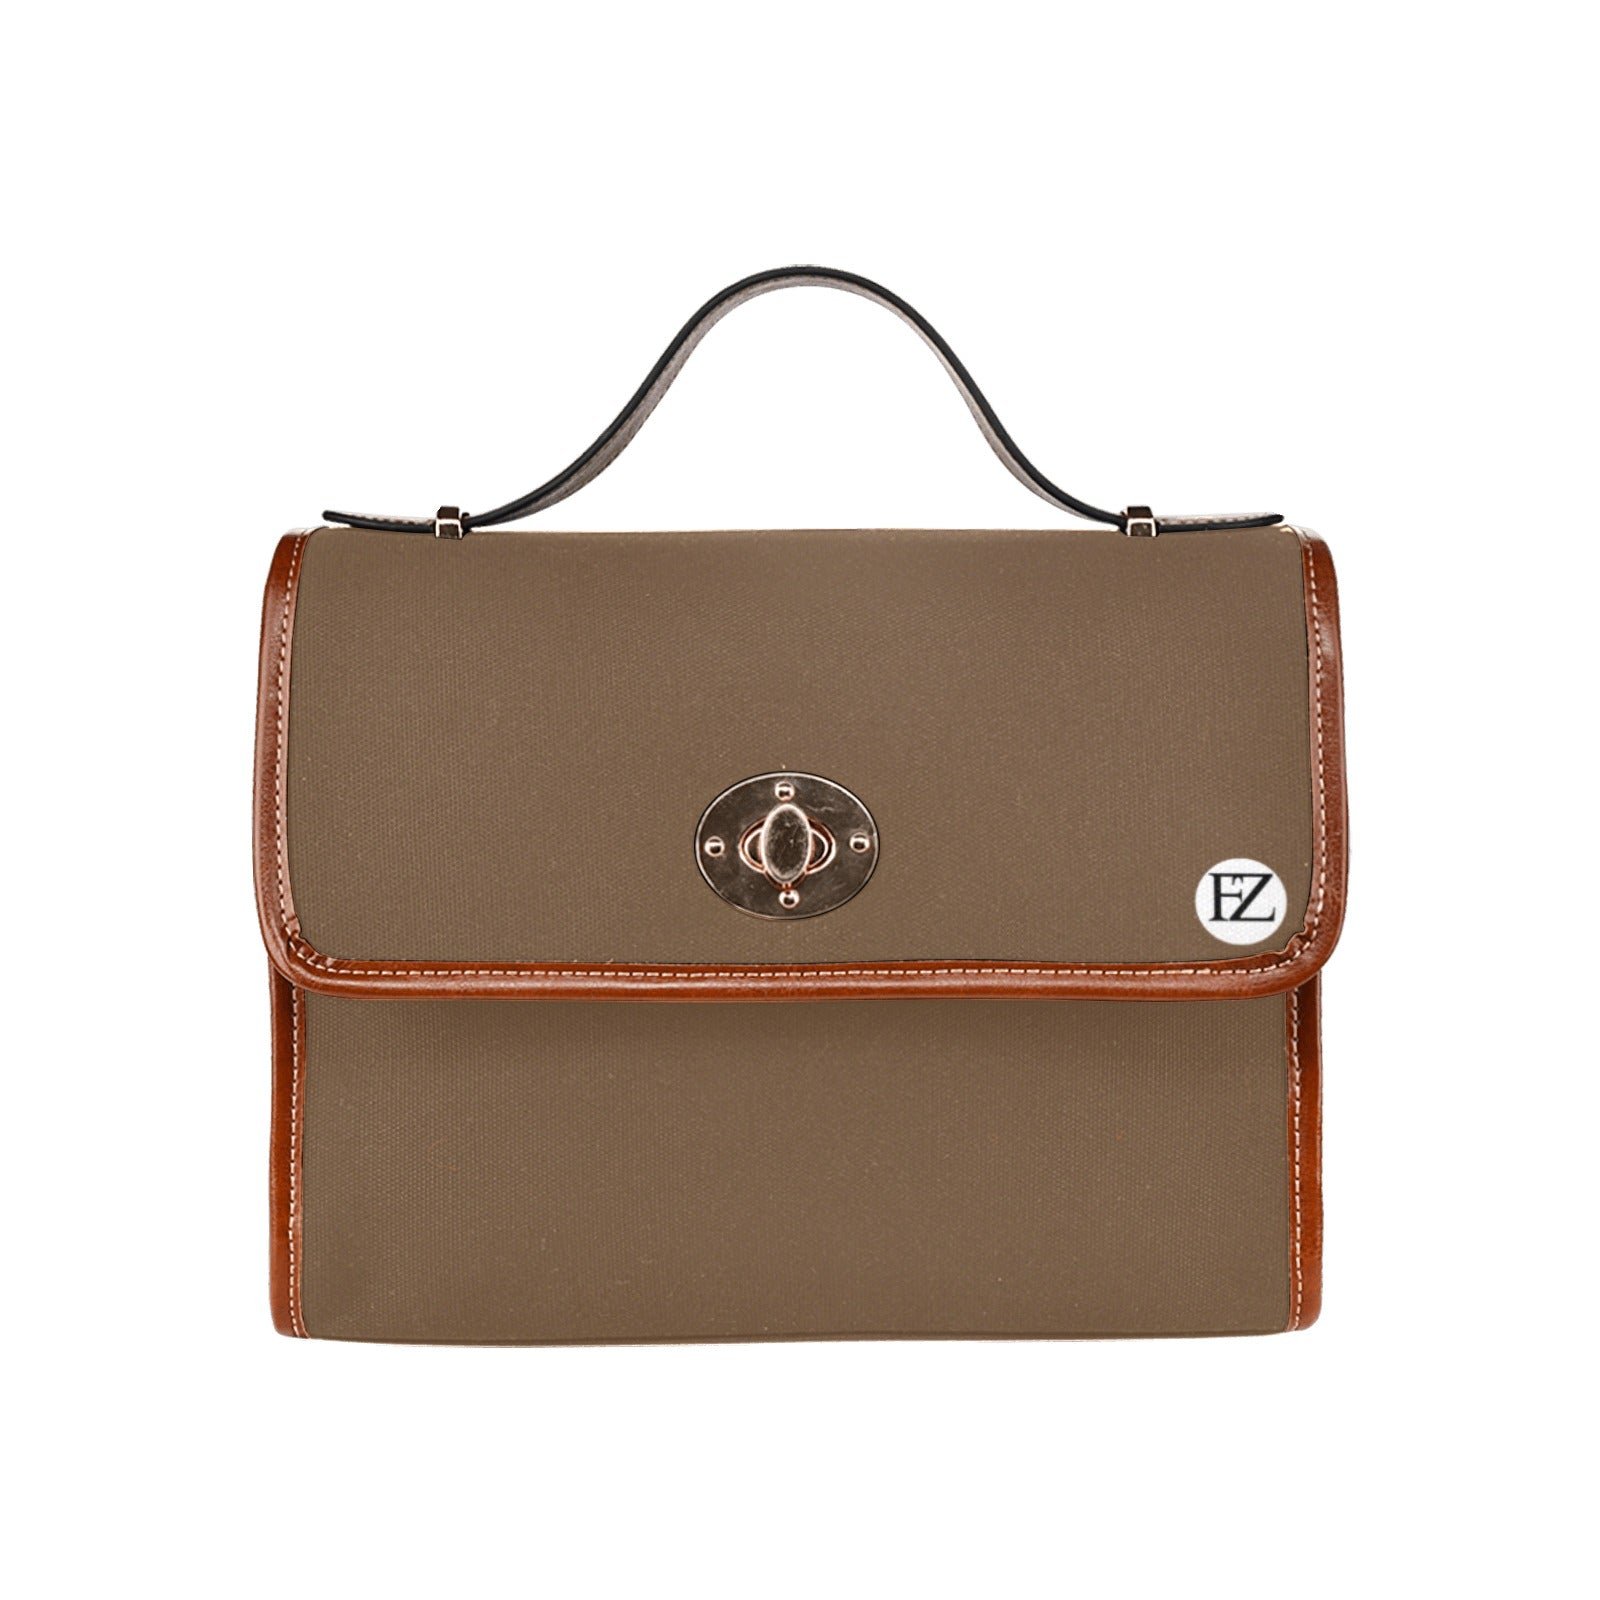 fz original handbag one size / fz - brown all over print waterproof canvas bag(model1641)(brown strap)